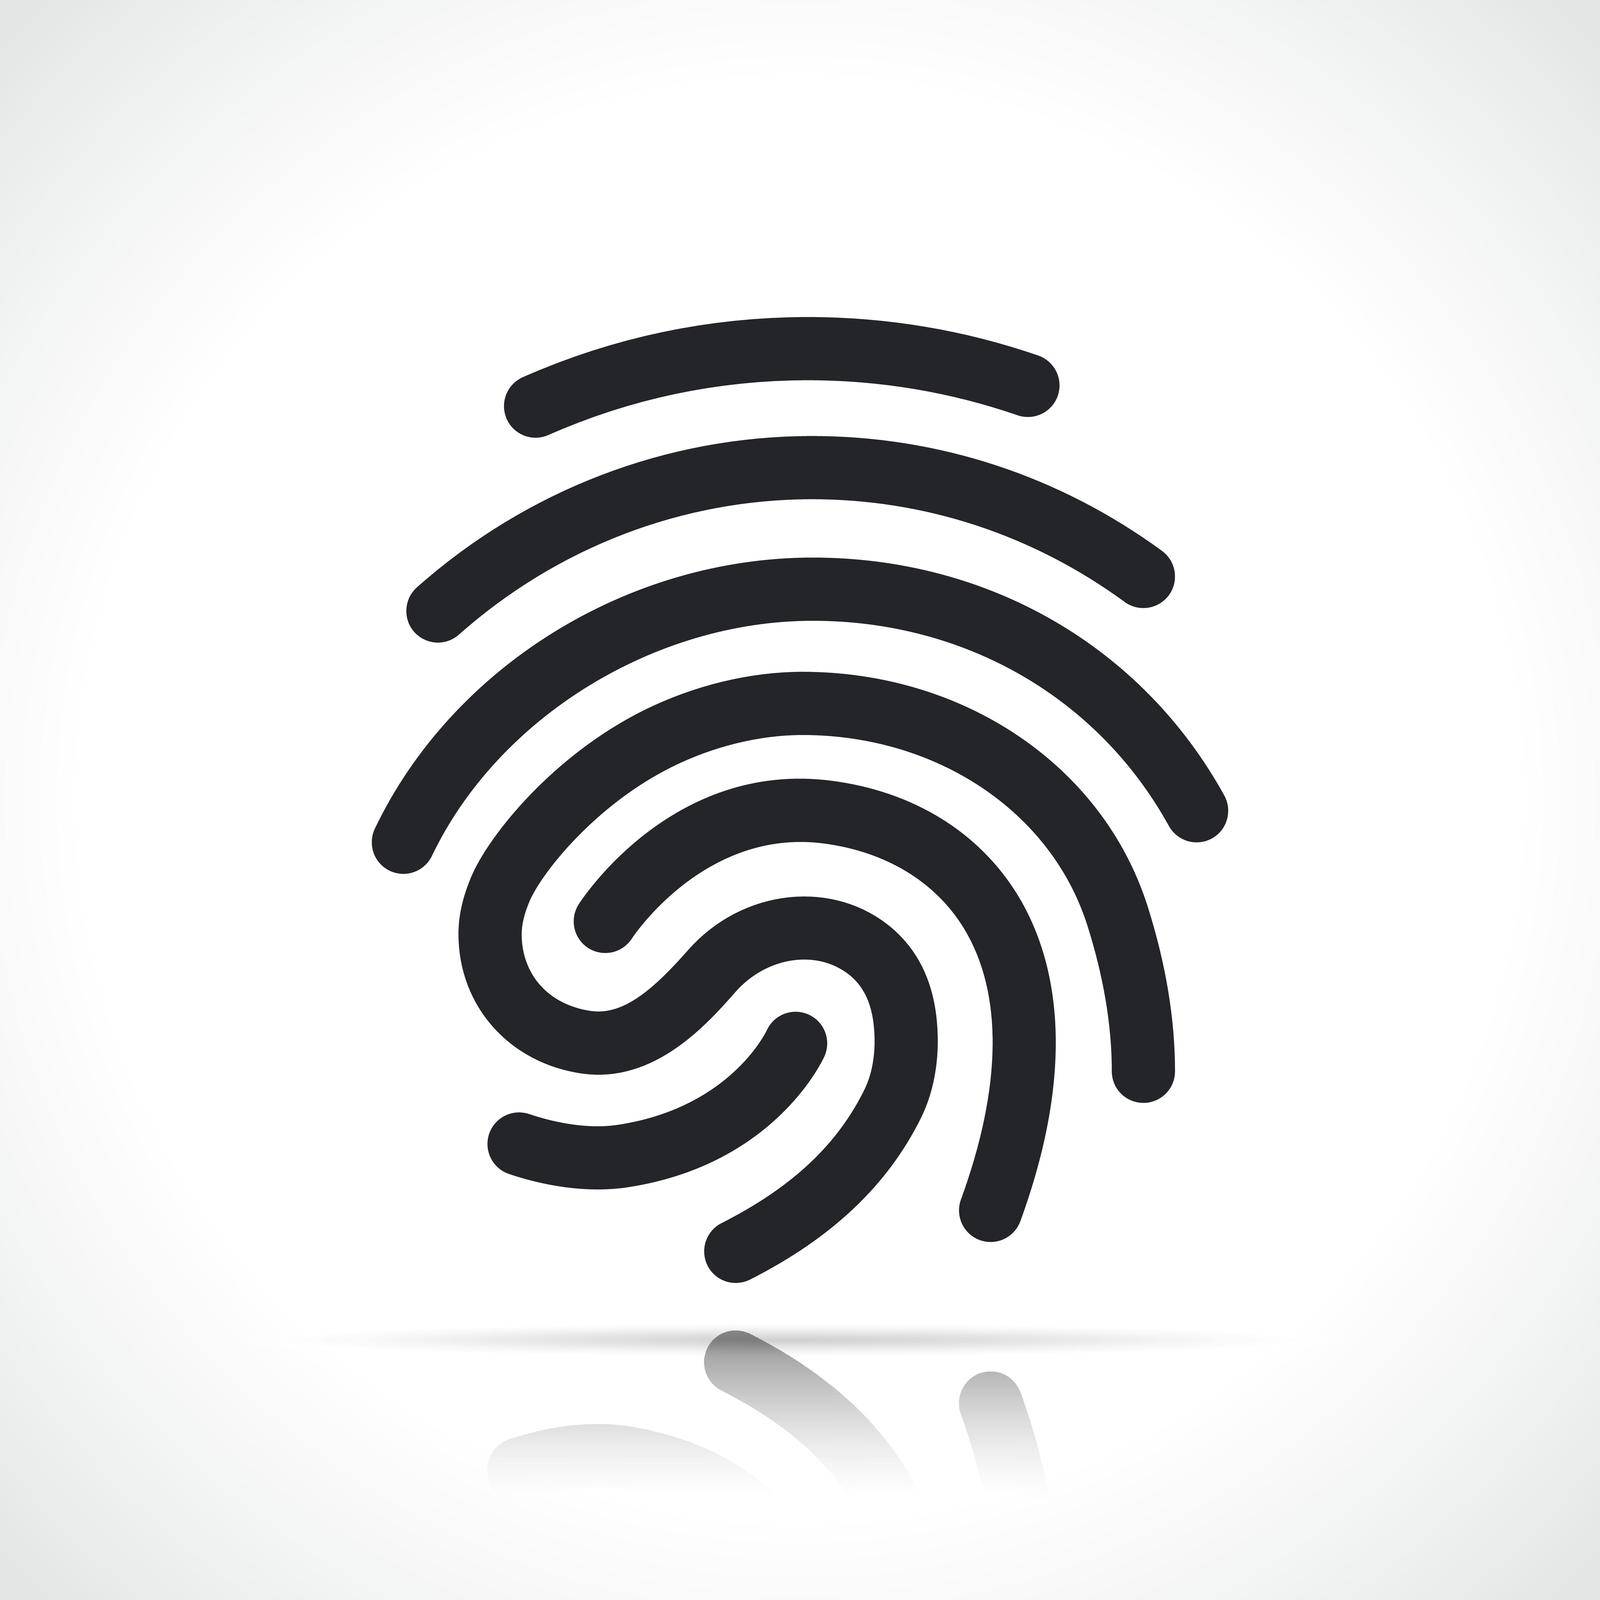 human fingerprint icon isolated design by Francois_Poirier